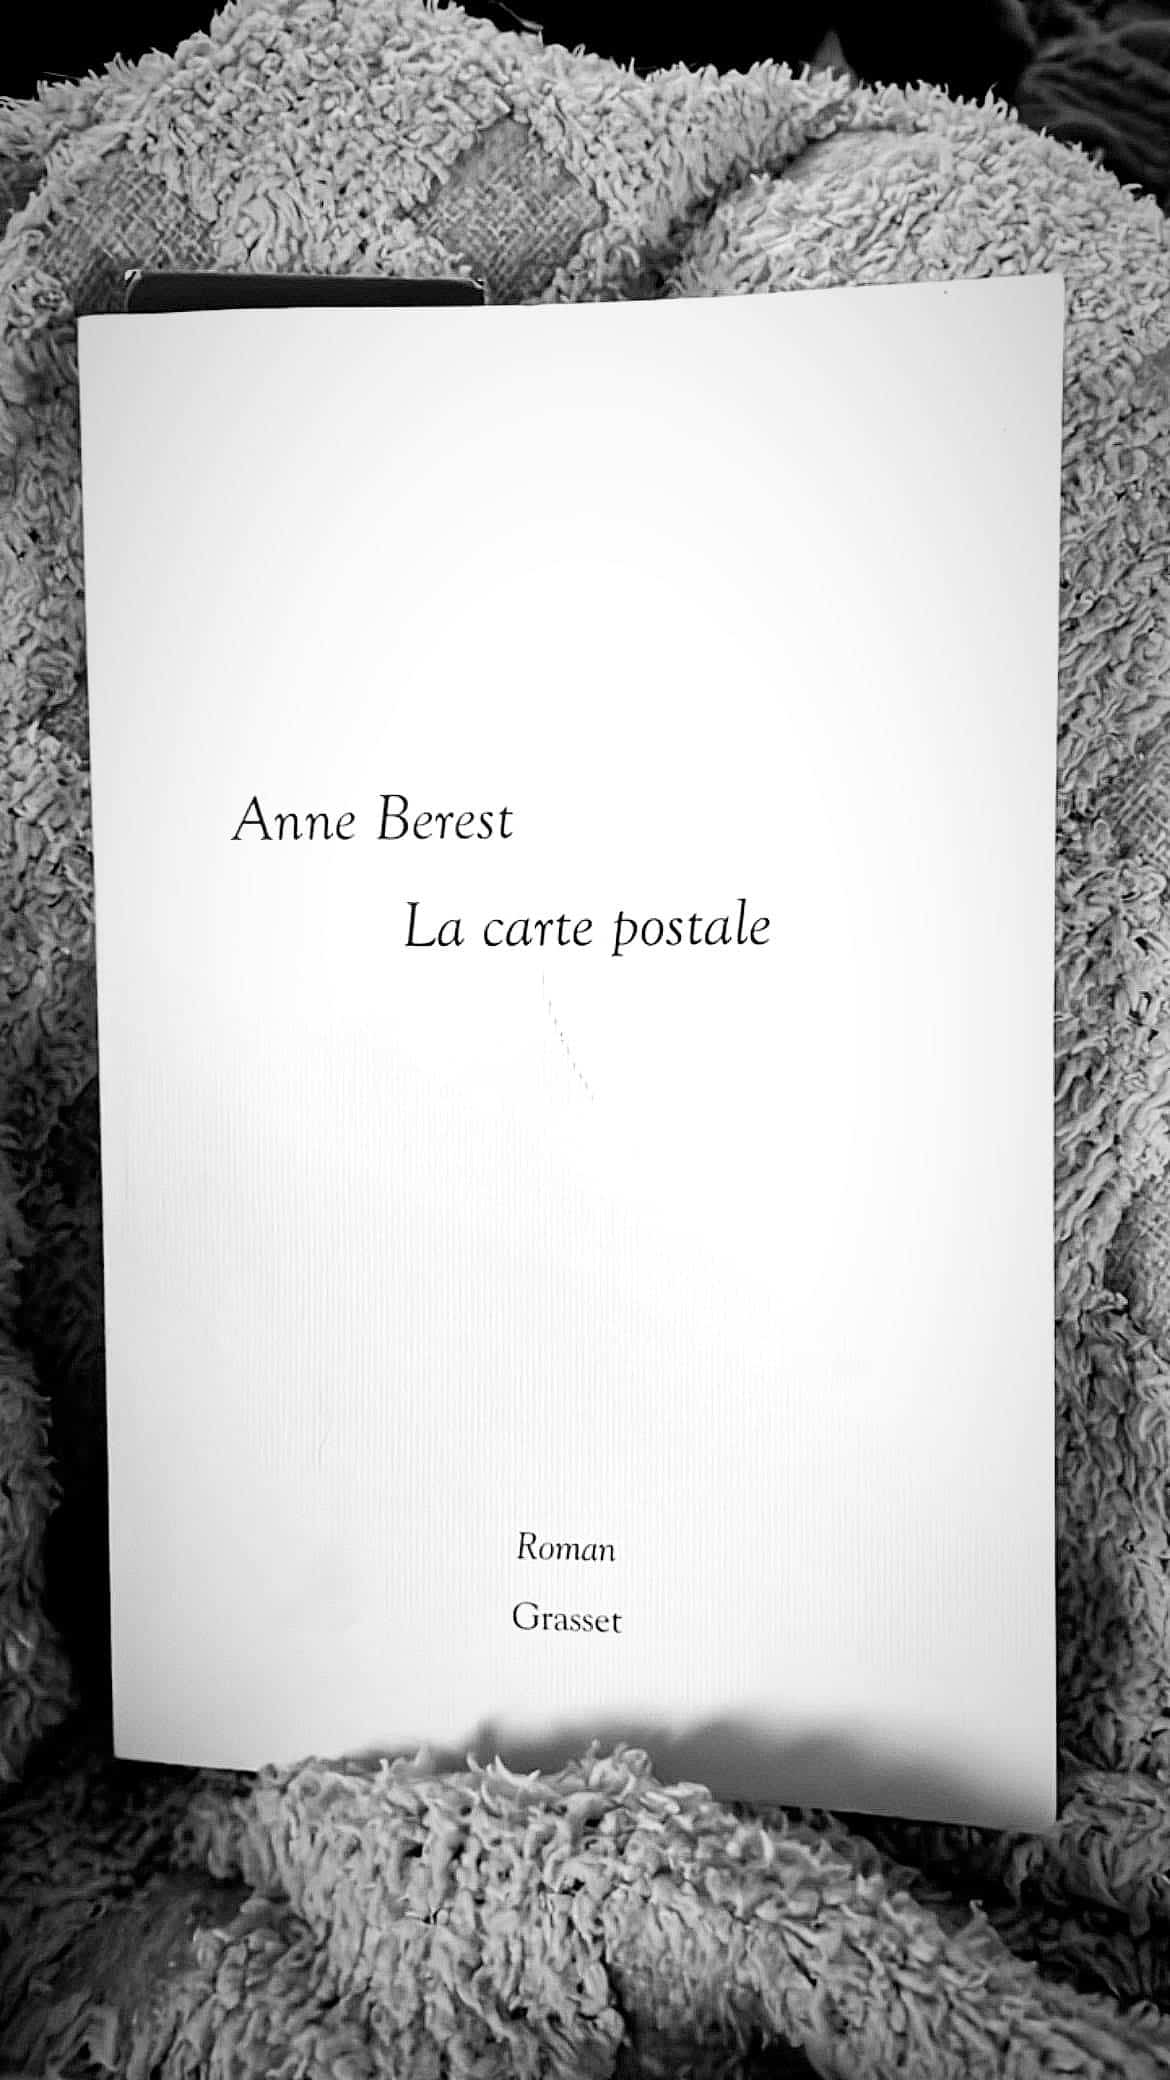 La carte postale, roman d'Anne Berest